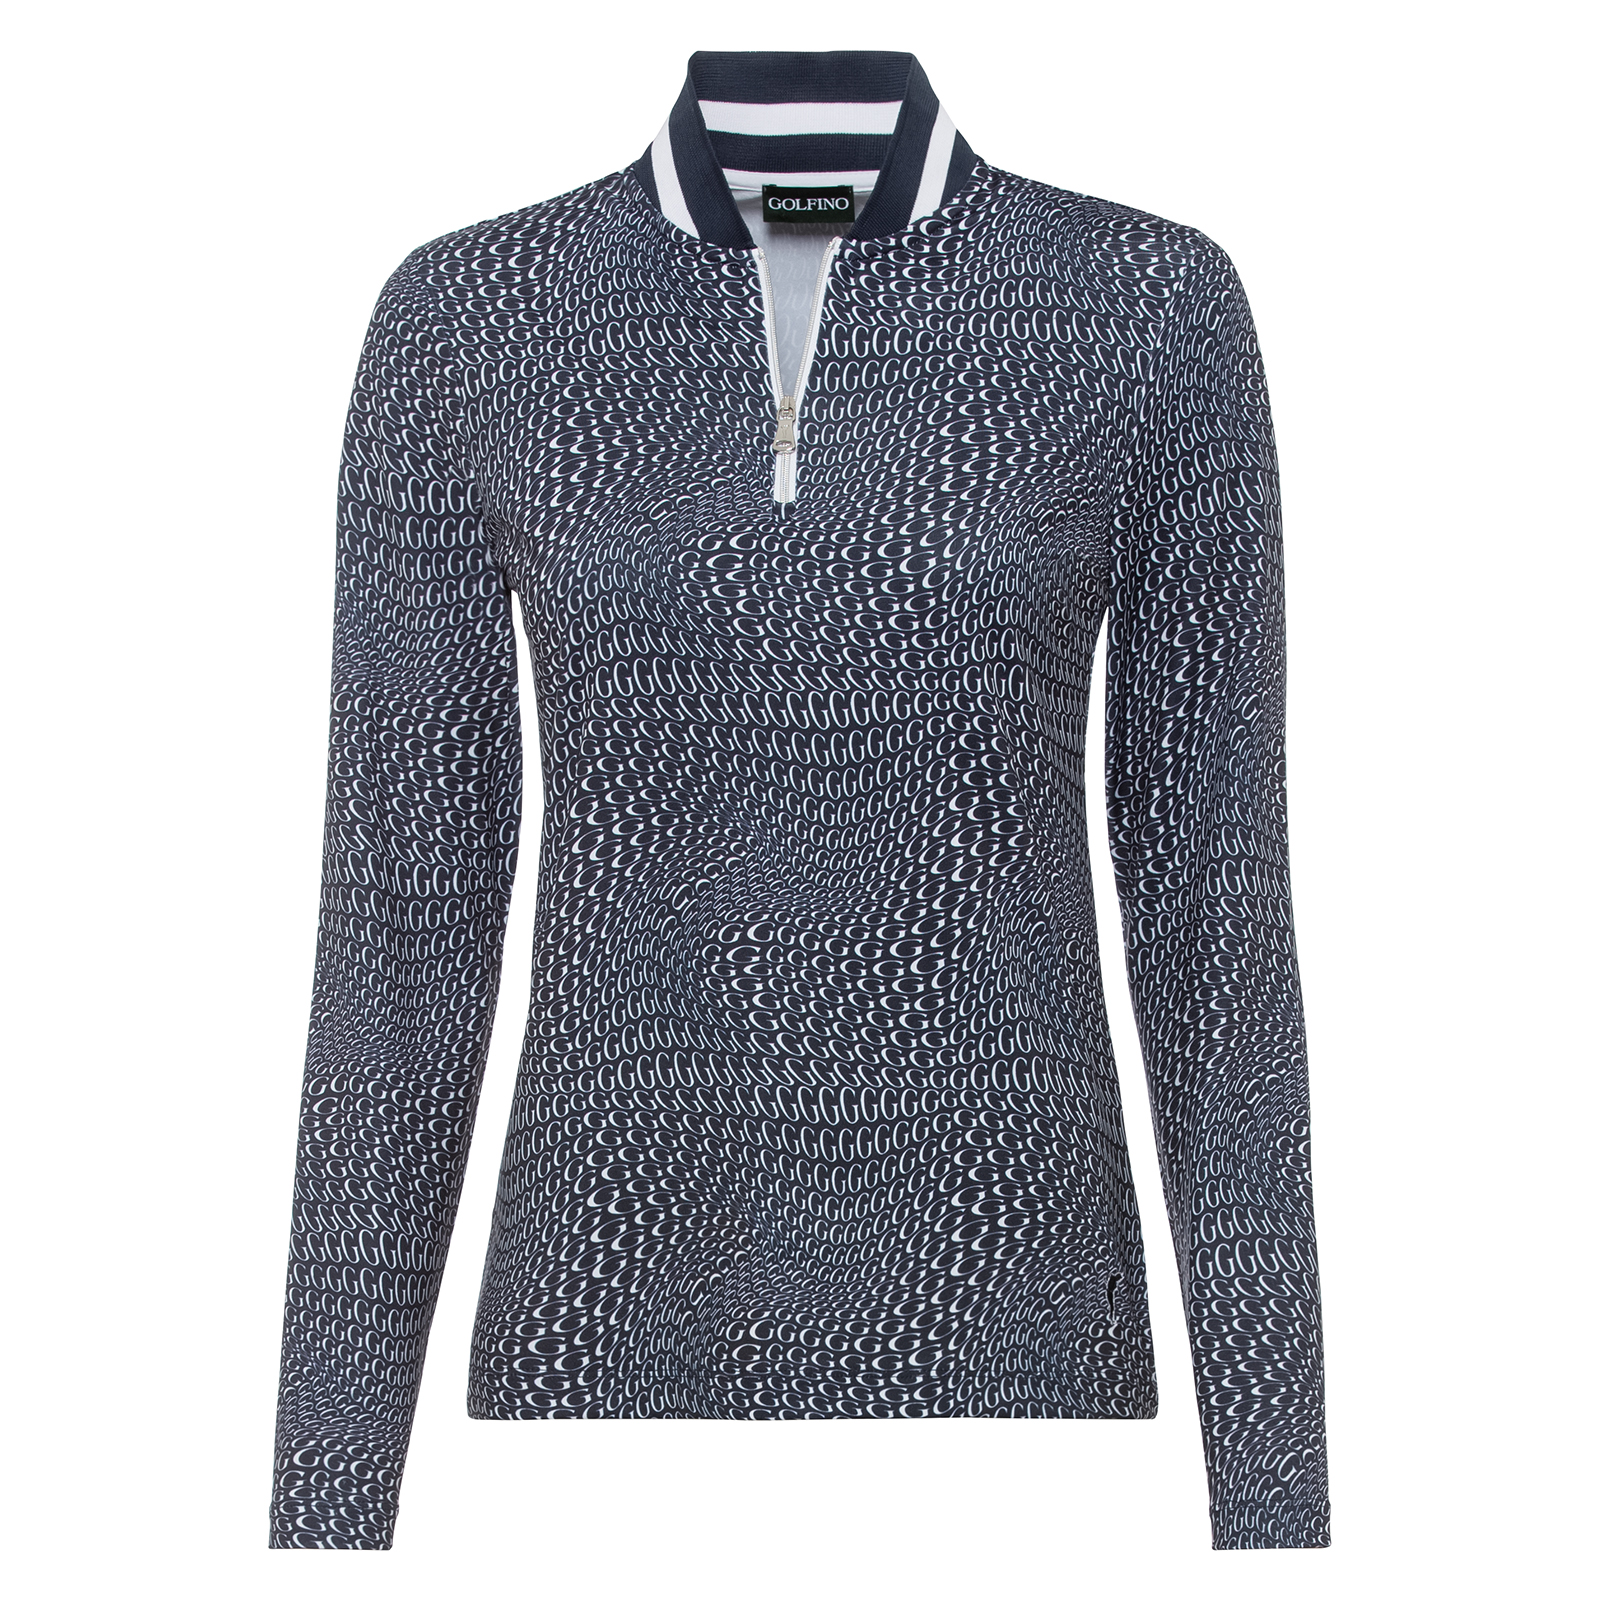 Ladies’ elegant half-zip golf sweater with all-over print